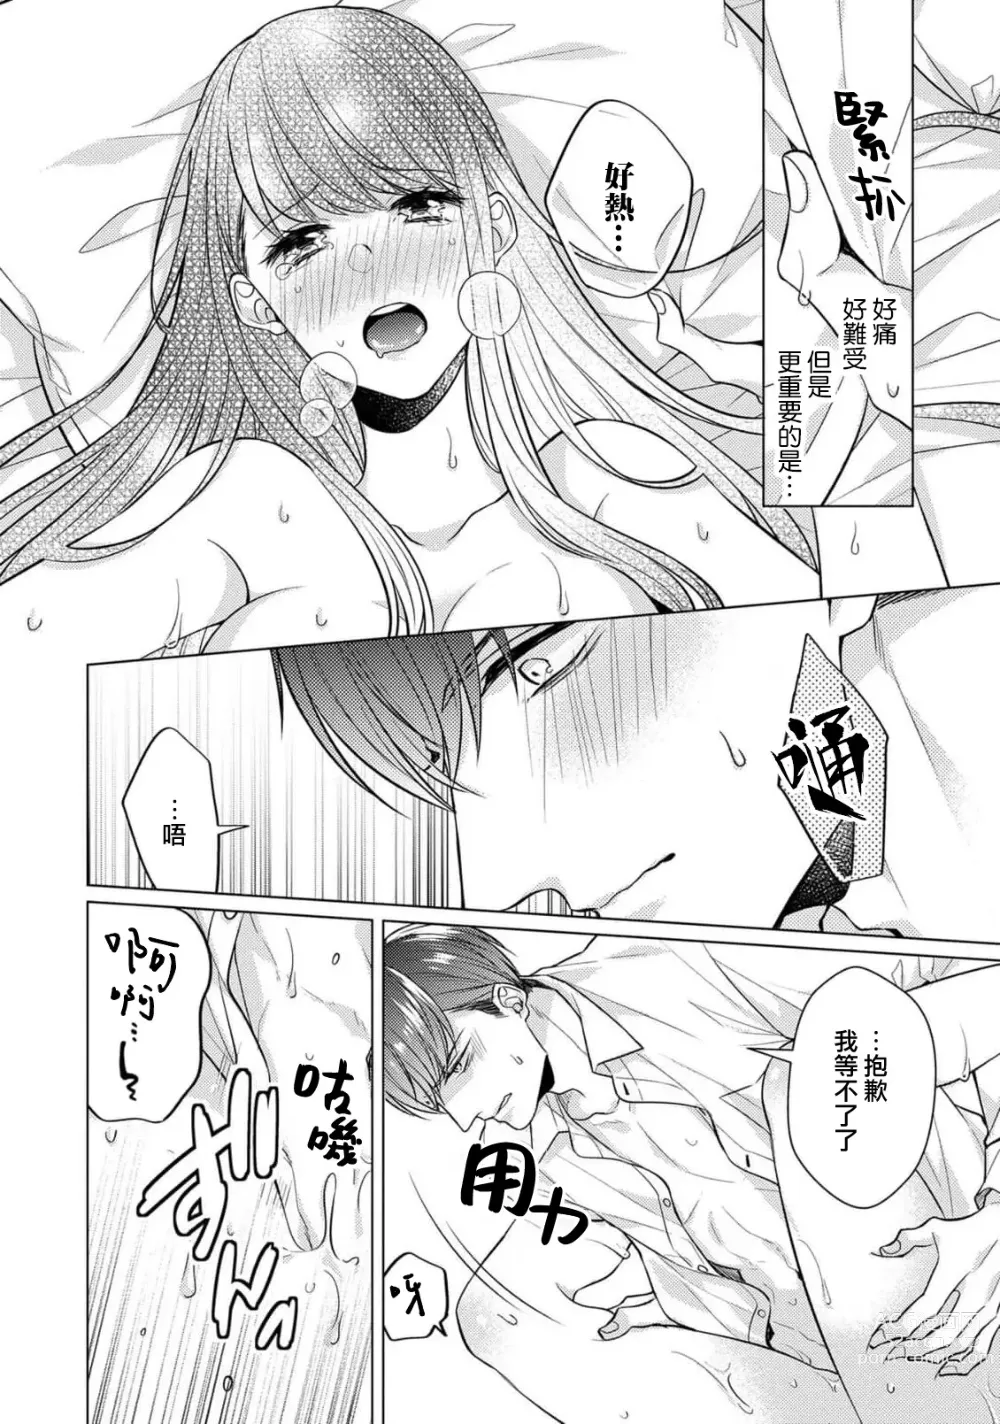 Page 31 of manga 宠爱王子和处女少女~30岁还是处女，这一次和真壁社长签订了炮友契约~ 1-5 end